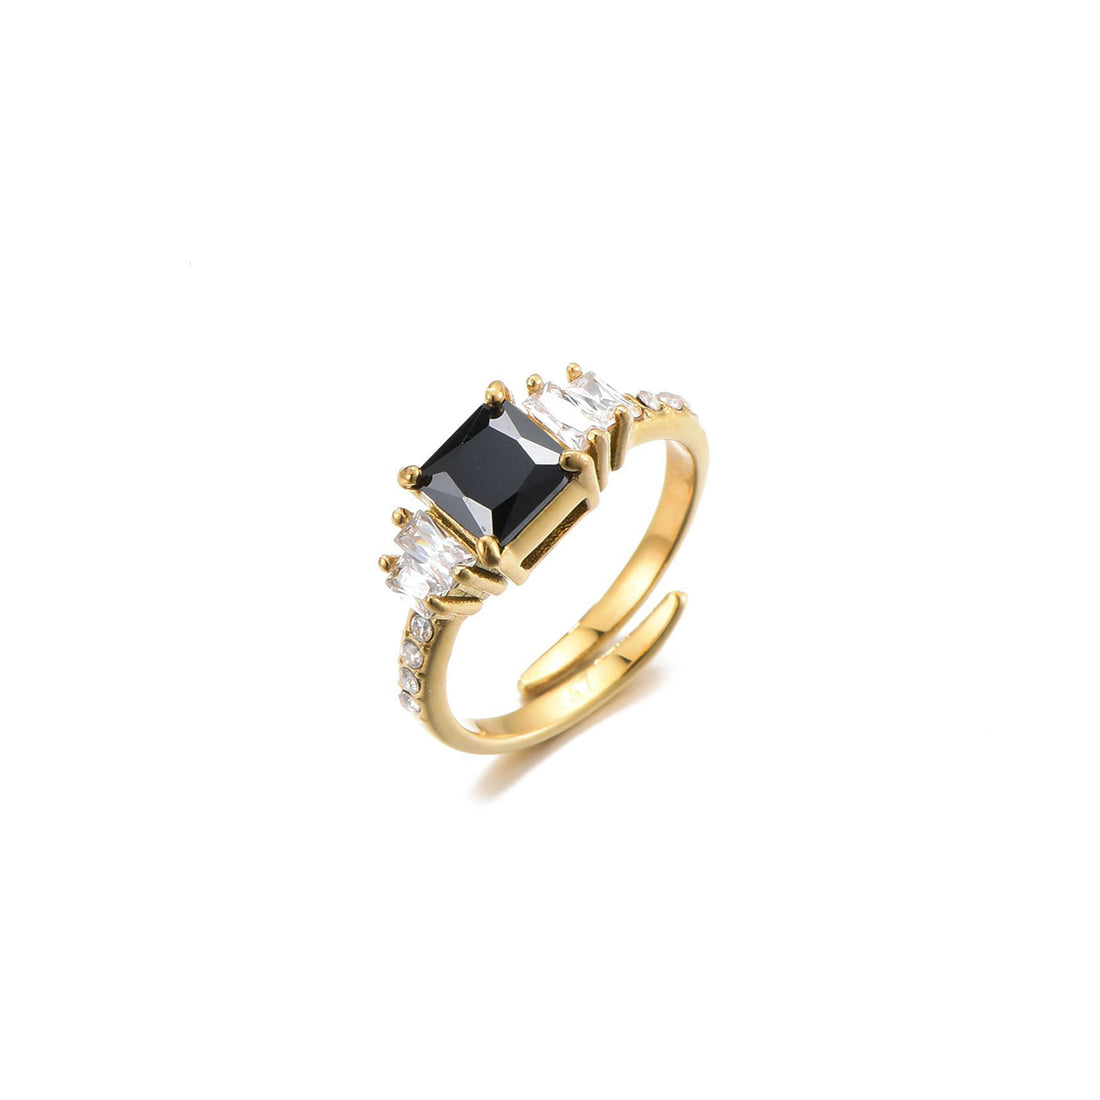 Vintage ring. Gouden vintage inspired ring ingelegd met zirconia steentjes en grote vierkante zirconia steen in het midden. De ring is van stainless steel en waterproof. 